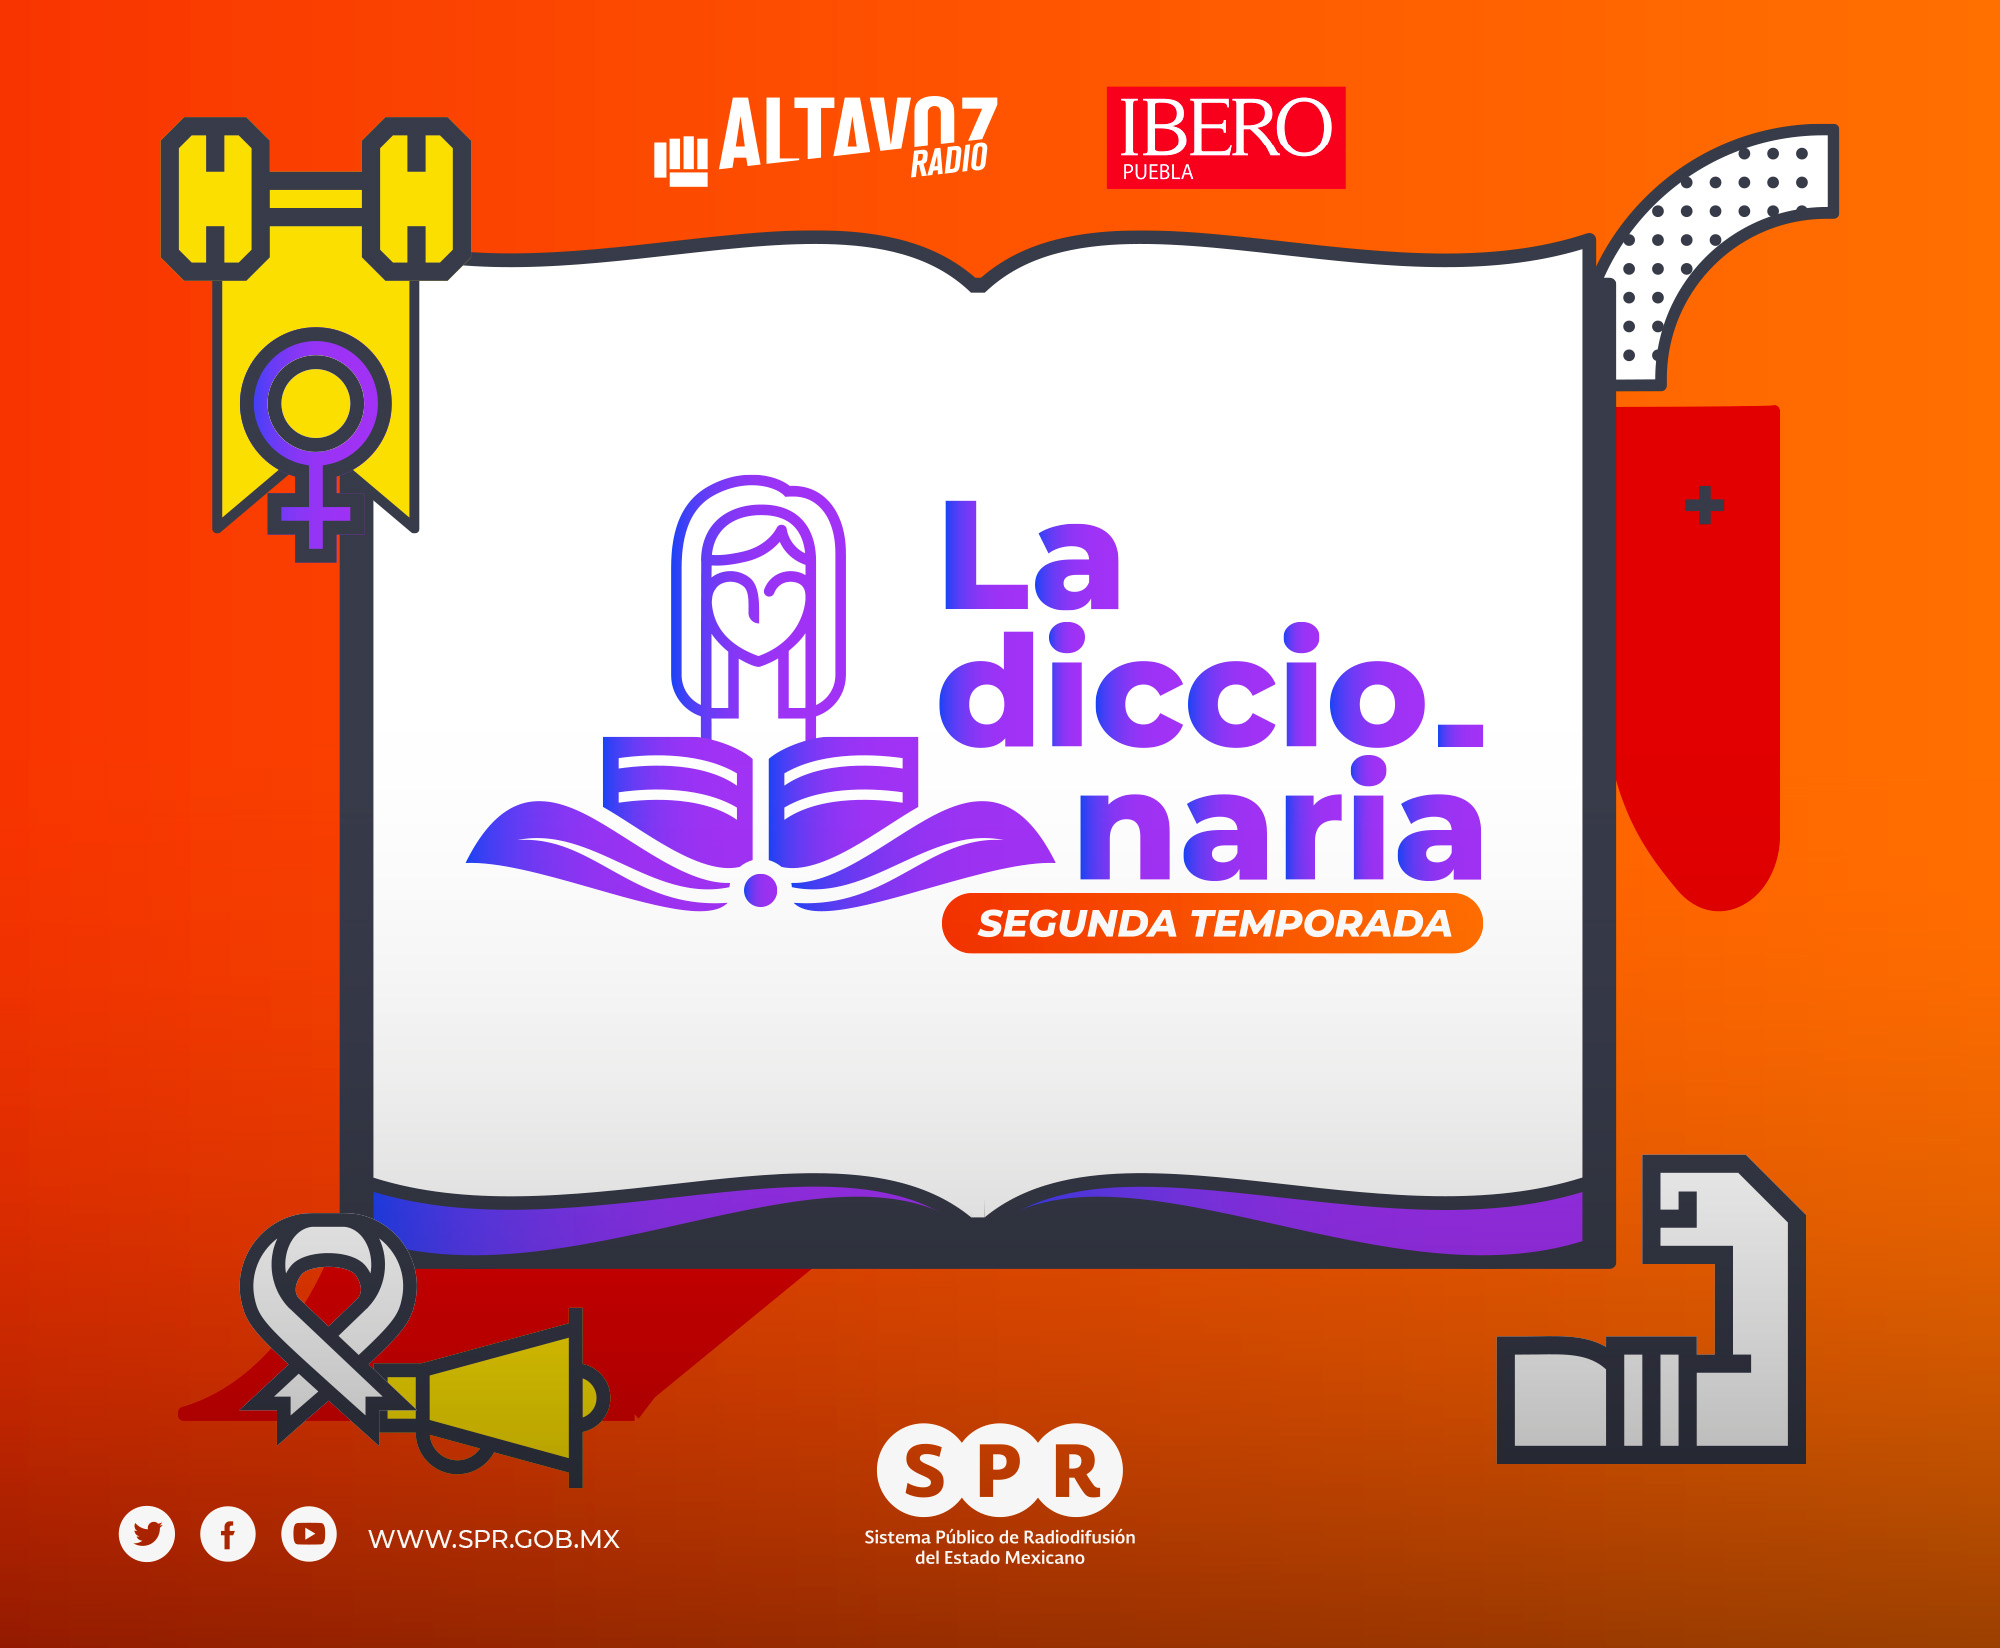 Altavoz Radio e IBERO Radio Puebla presentan la segunda temporada de <b><i>La Diccionaria</i></b>